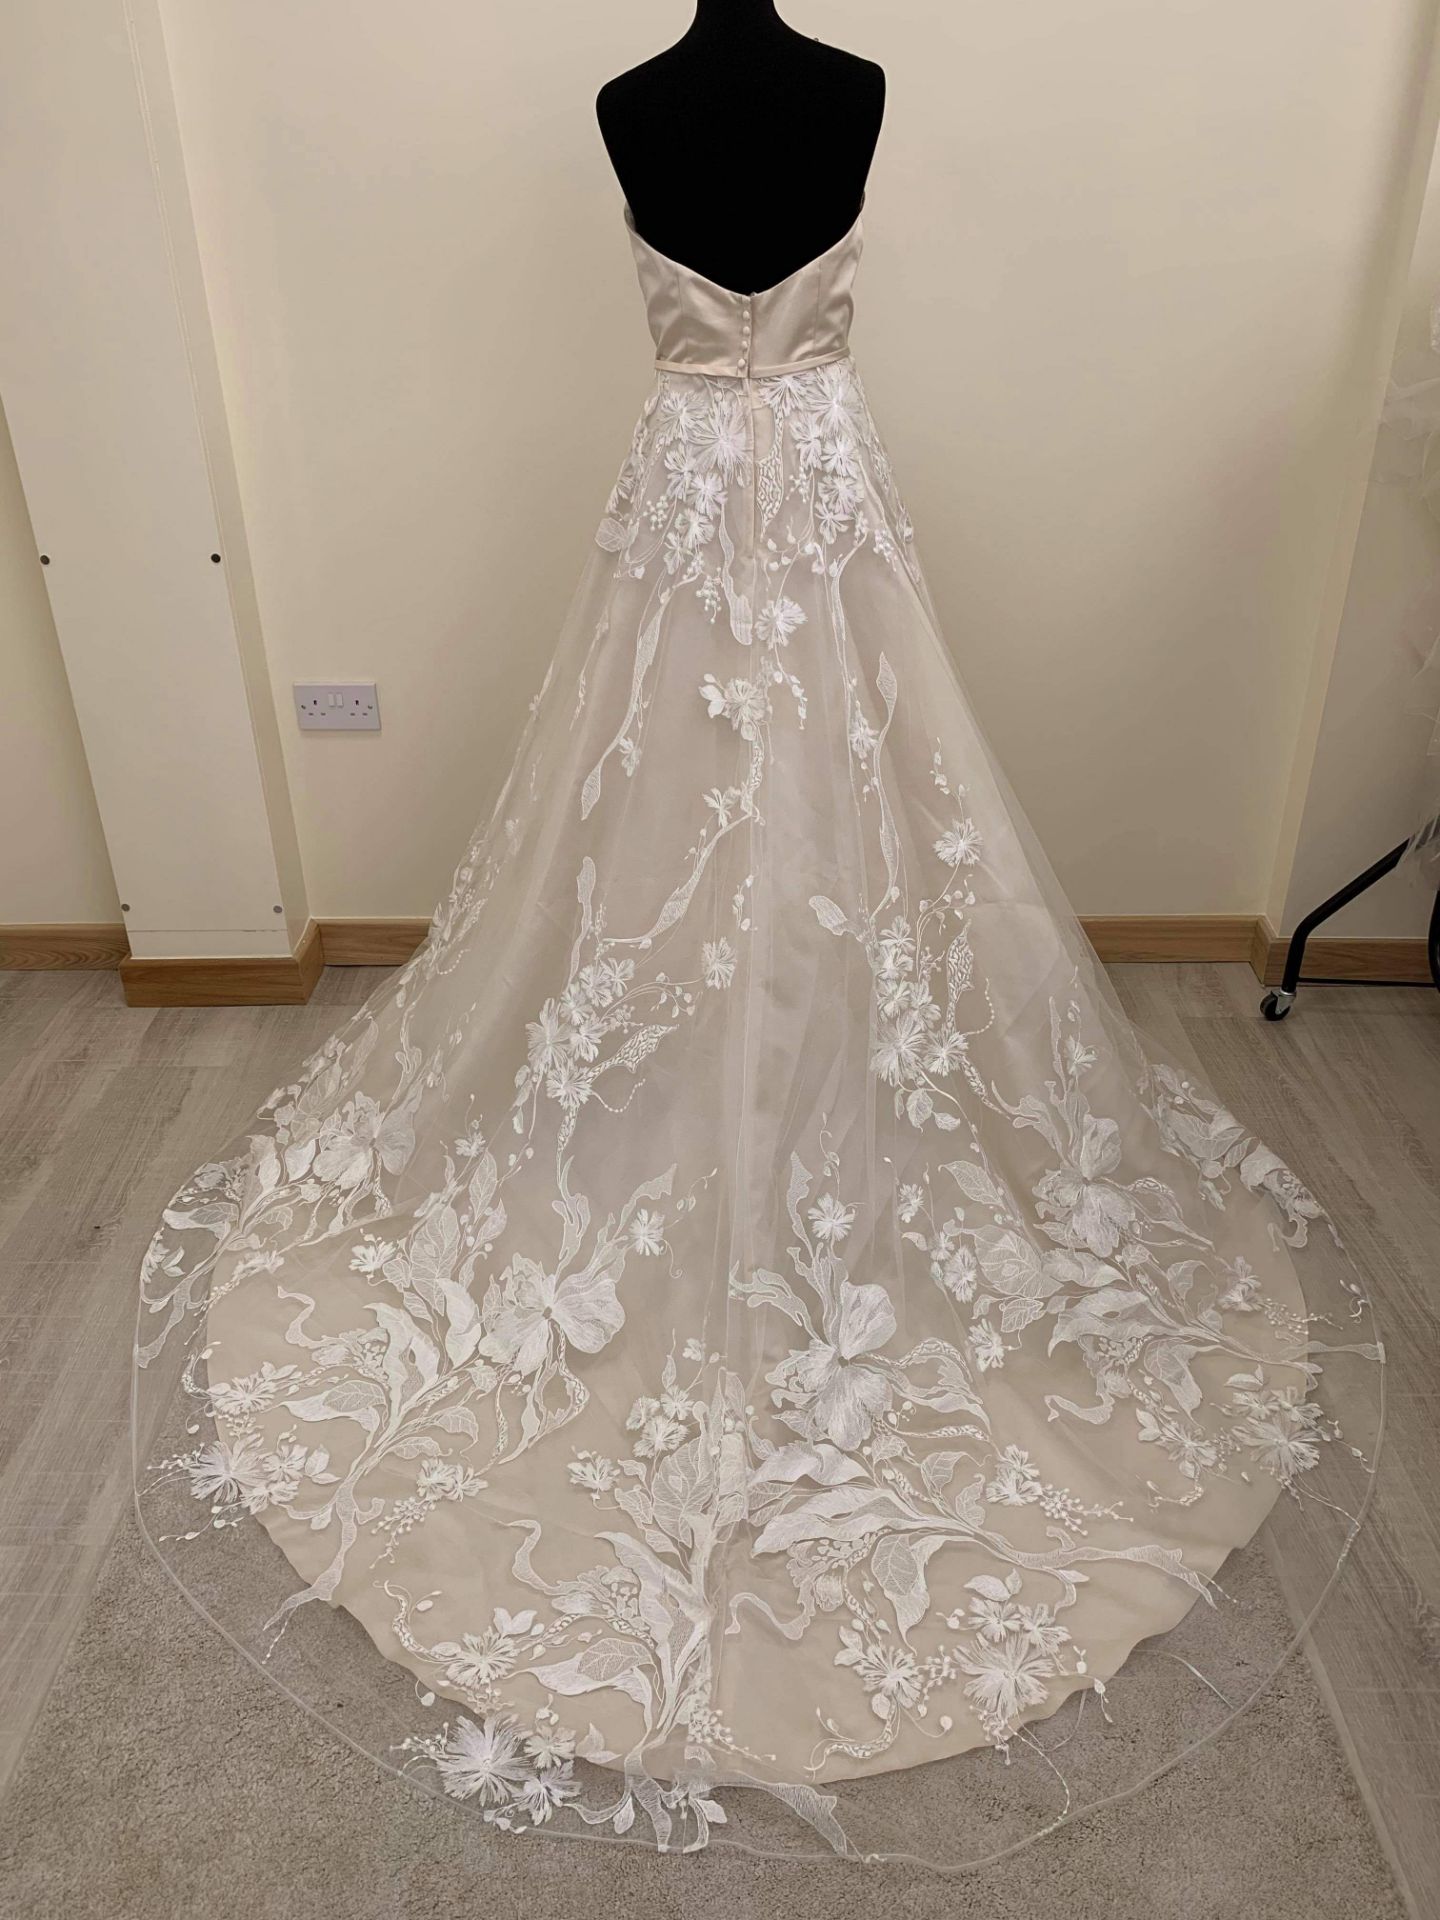 Catherine Parry Wedding Dress - Image 2 of 3